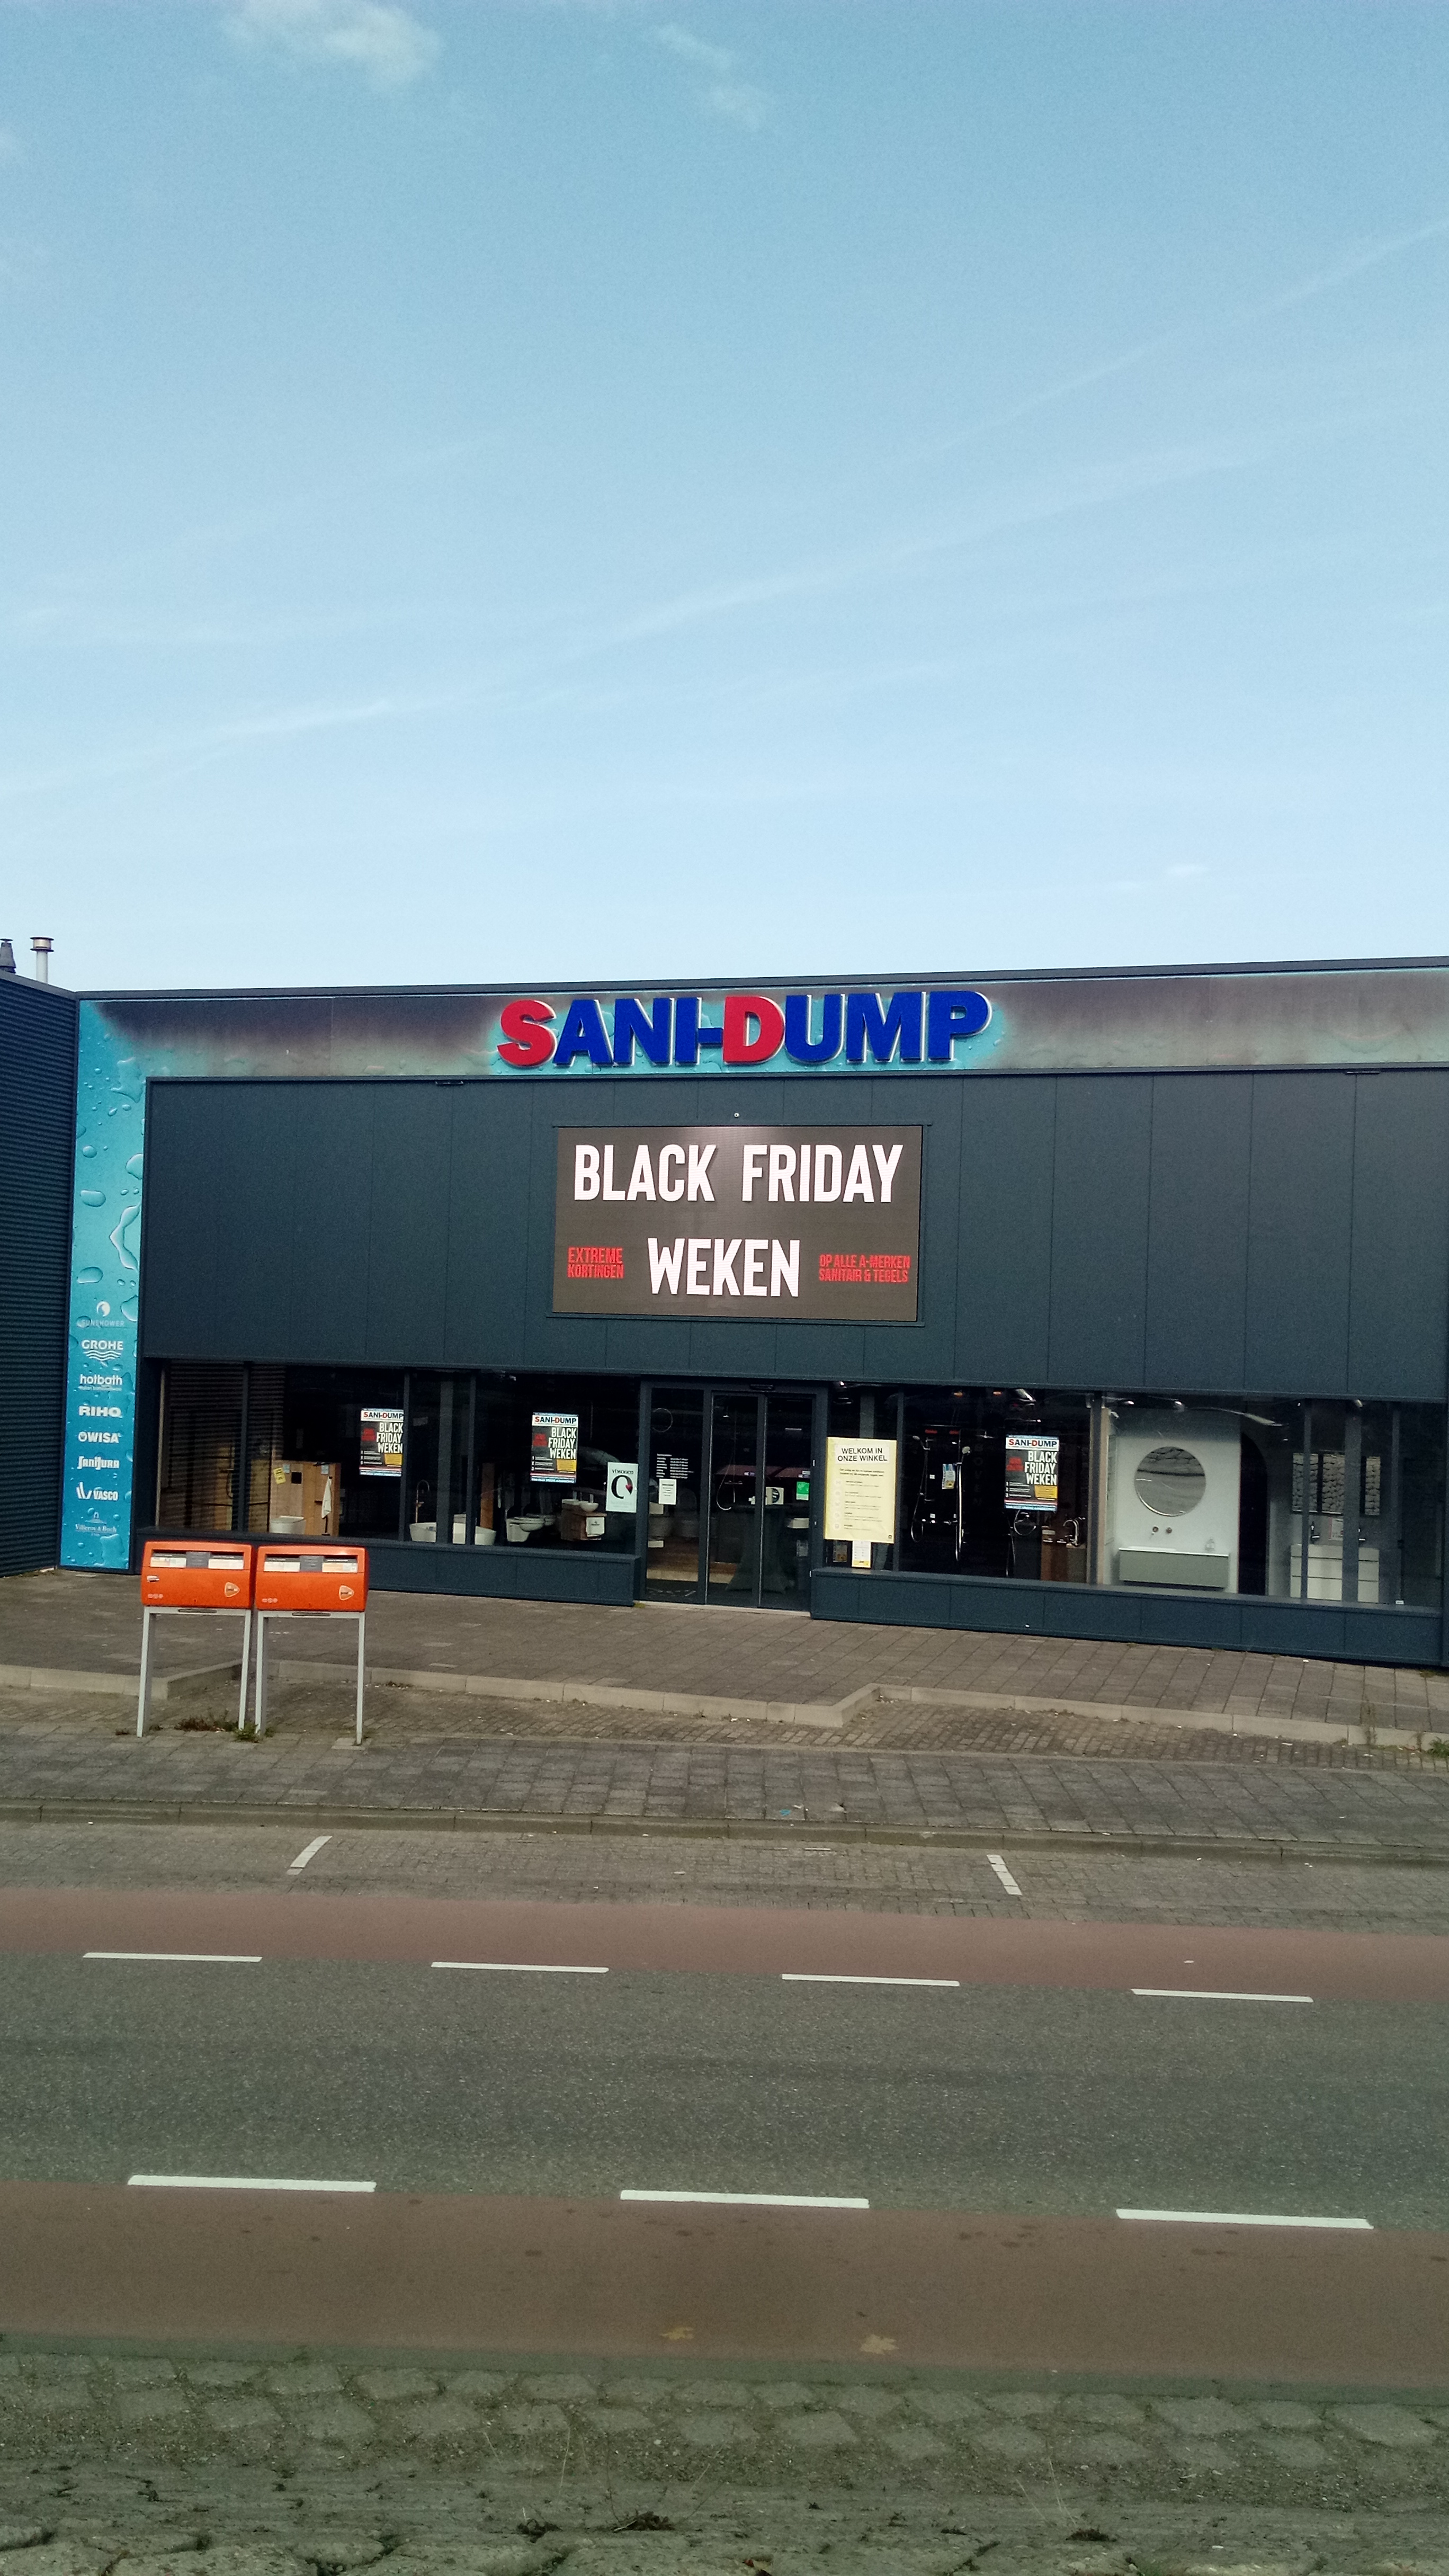 File:Sani-Dump Black Friday Week, IJsselmonde, Rotterdam (2020) 02.jpg Wikimedia Commons